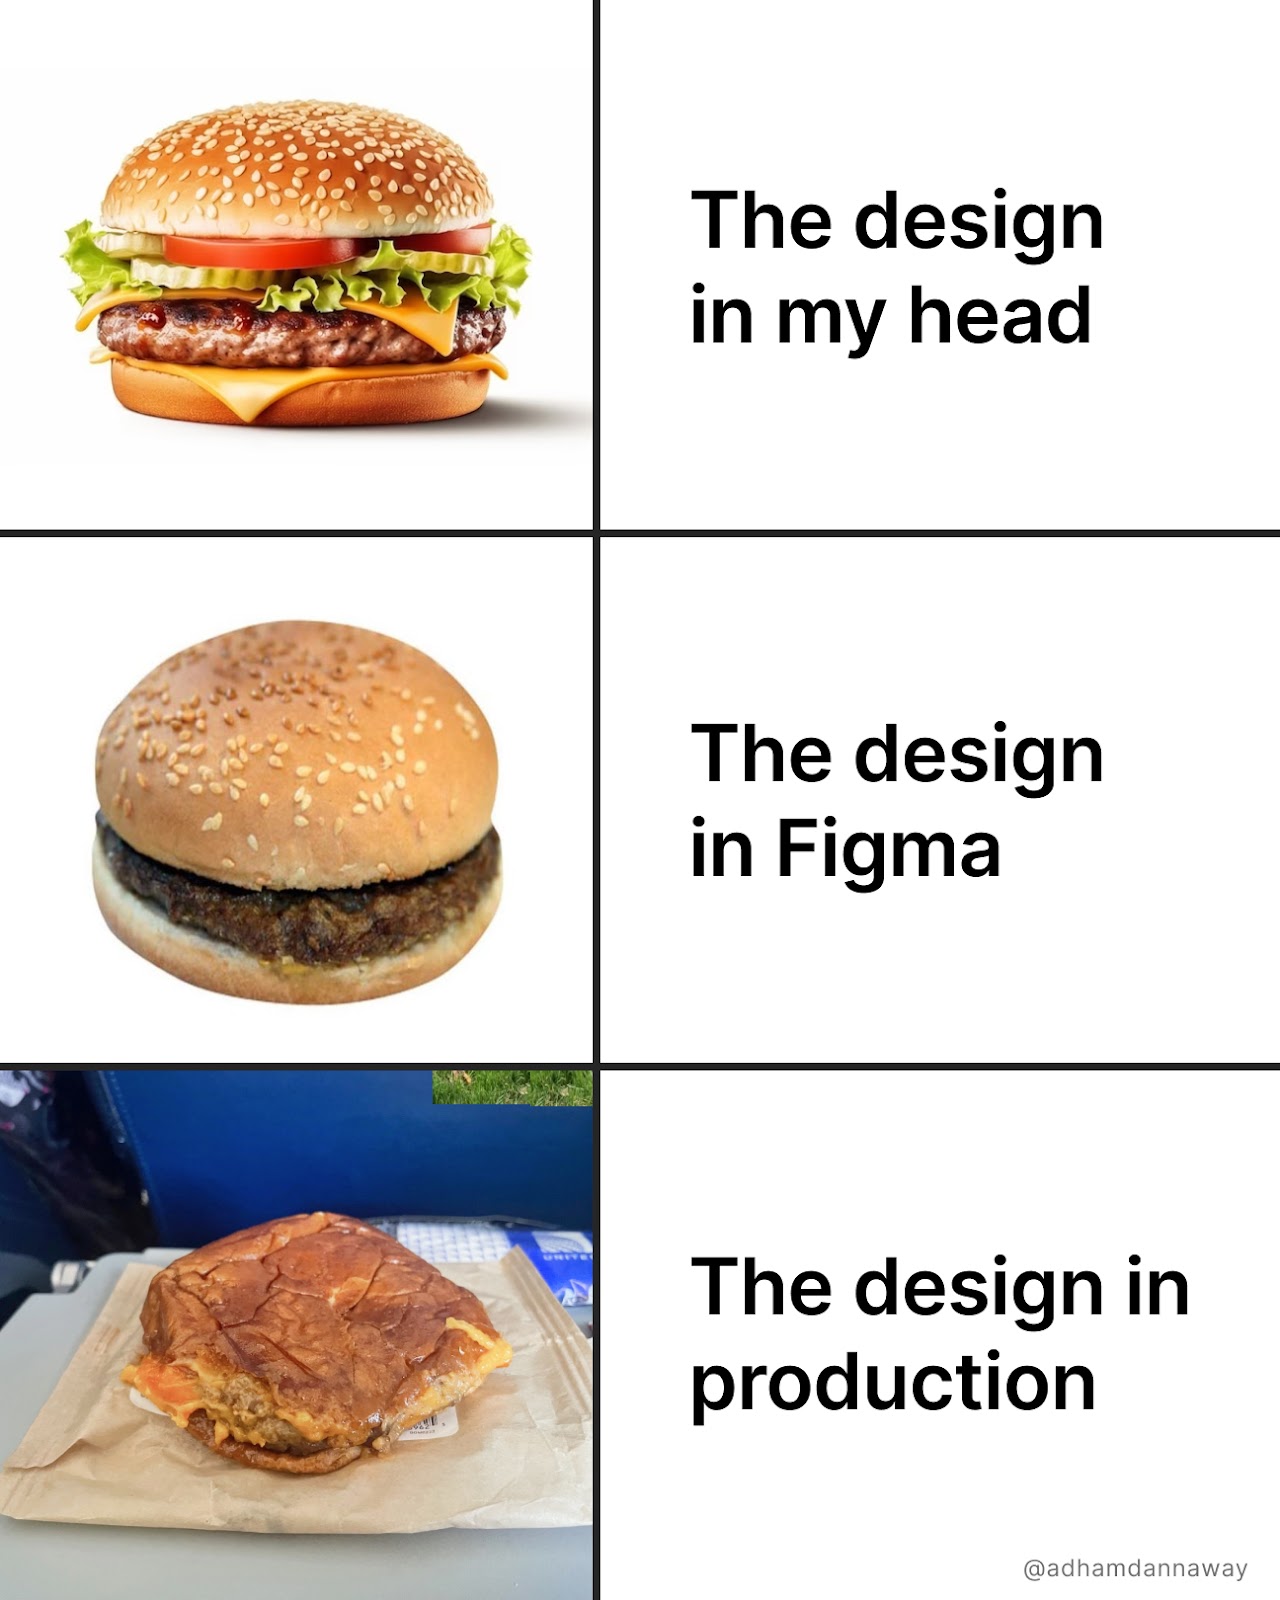 Nice looking burger "The design in my head", plain-looking burger "The design in Figma", smashed and messy burger "the design in production"